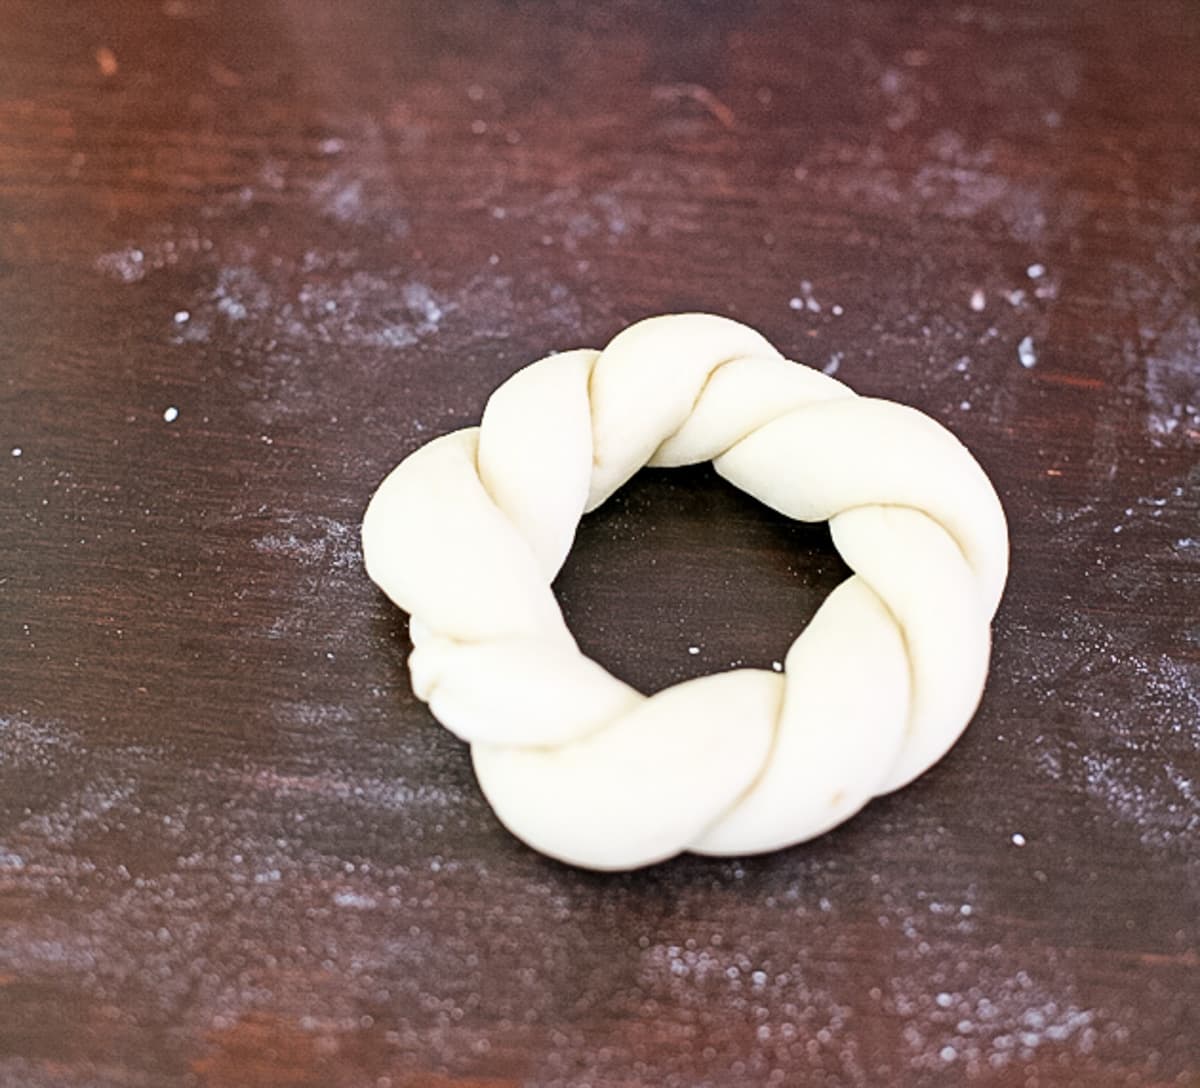 the challah ring bun ready for baking